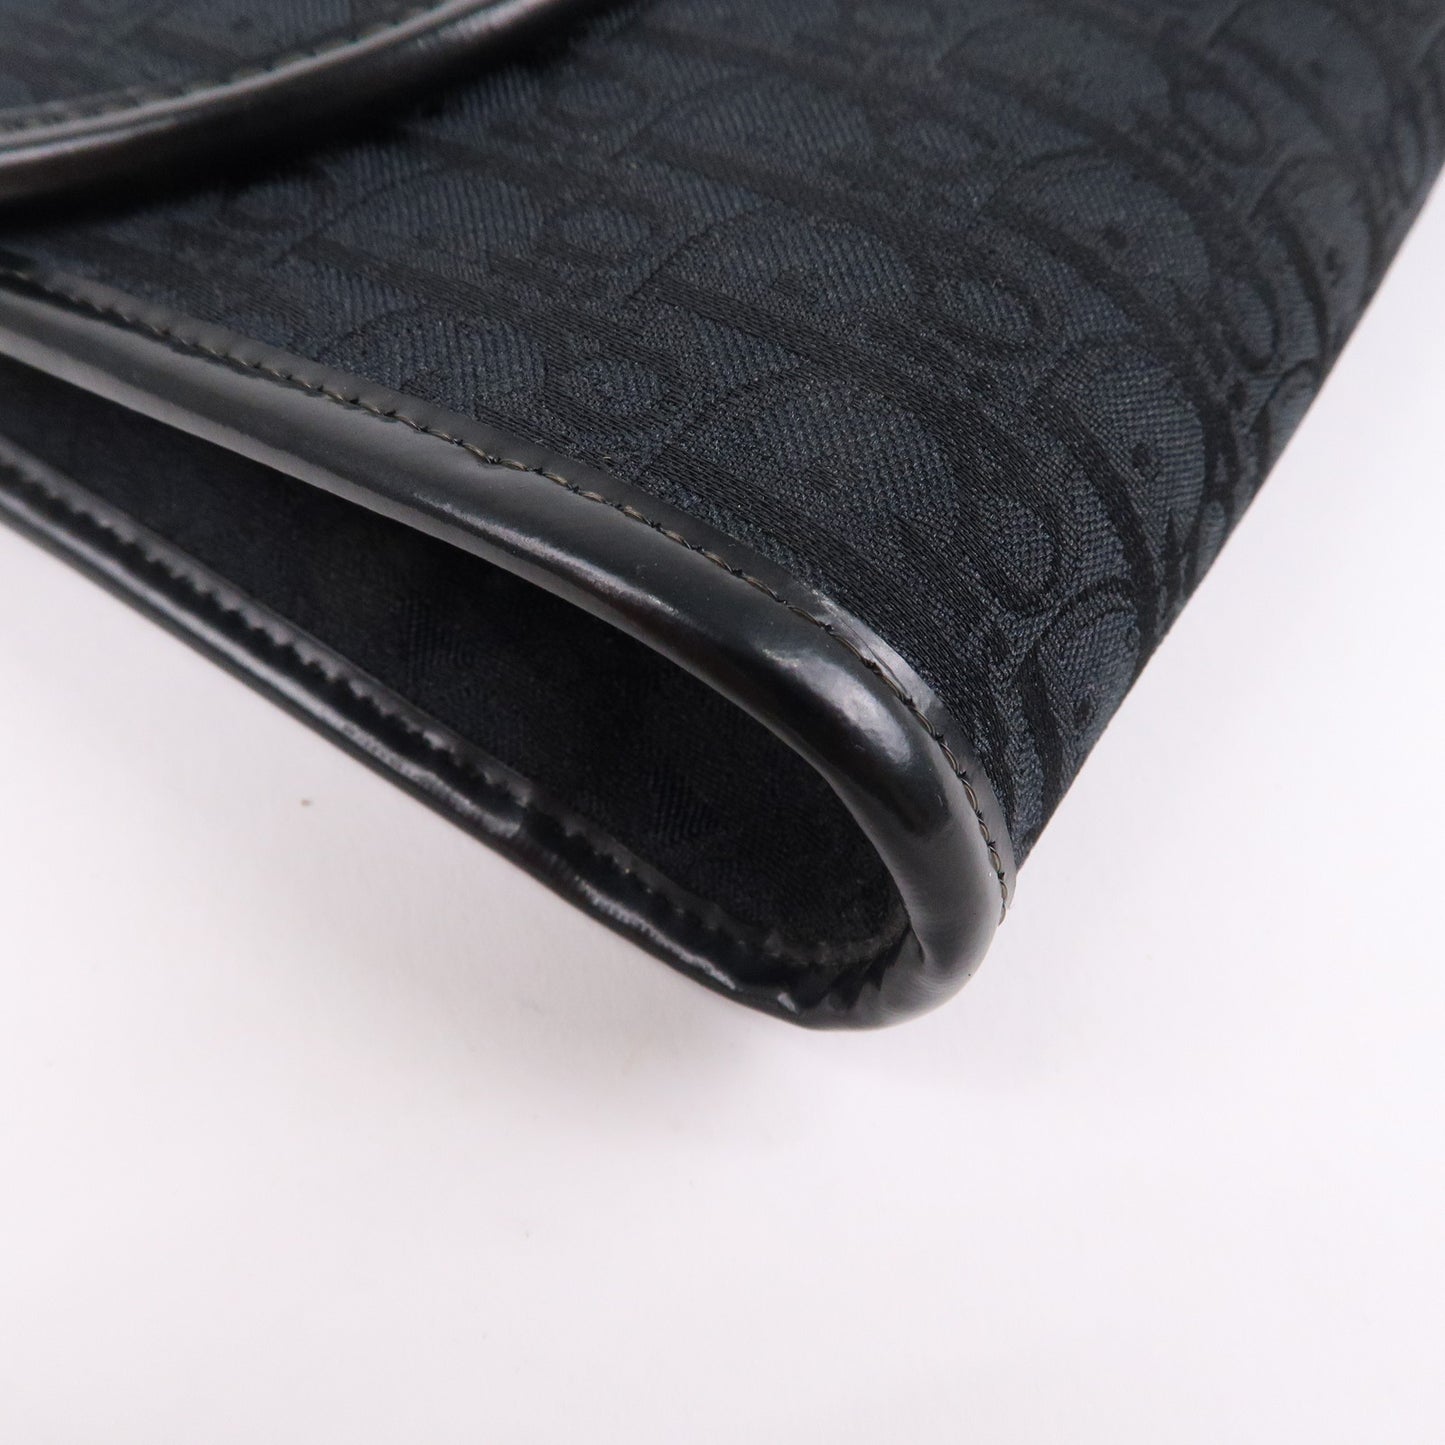 Christian Dior Trotter Canvas Leather Chain Shoulder Bag